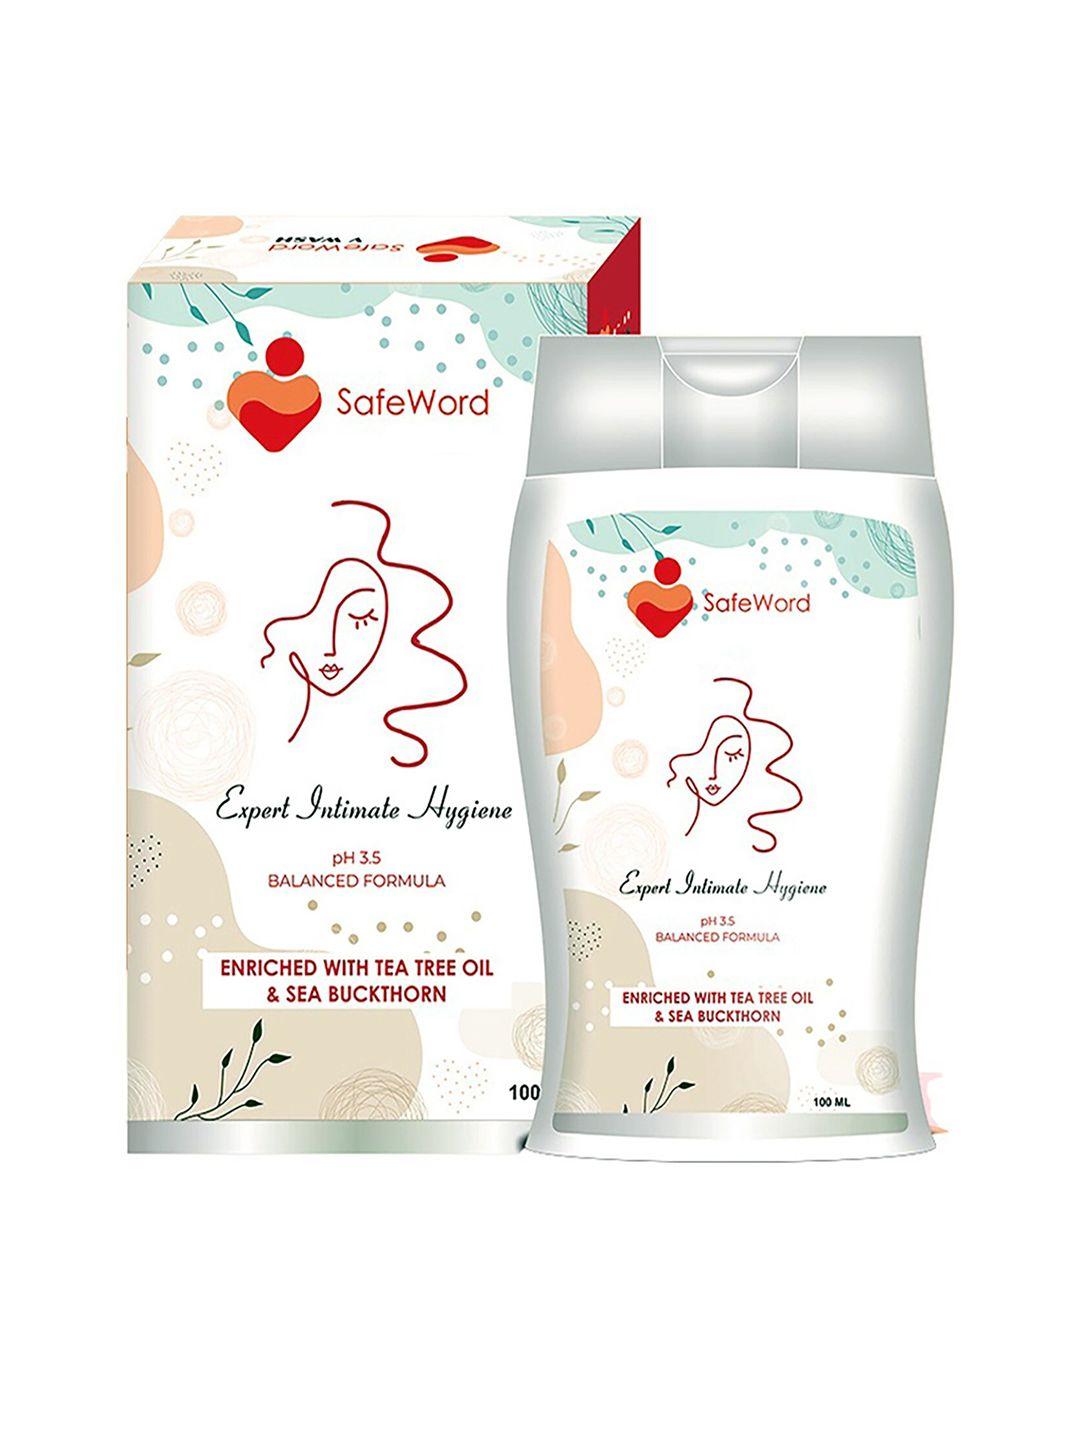 safeword expert intimate hygiene intimate wash with tea tree oil & sea buckthorn - 100 ml